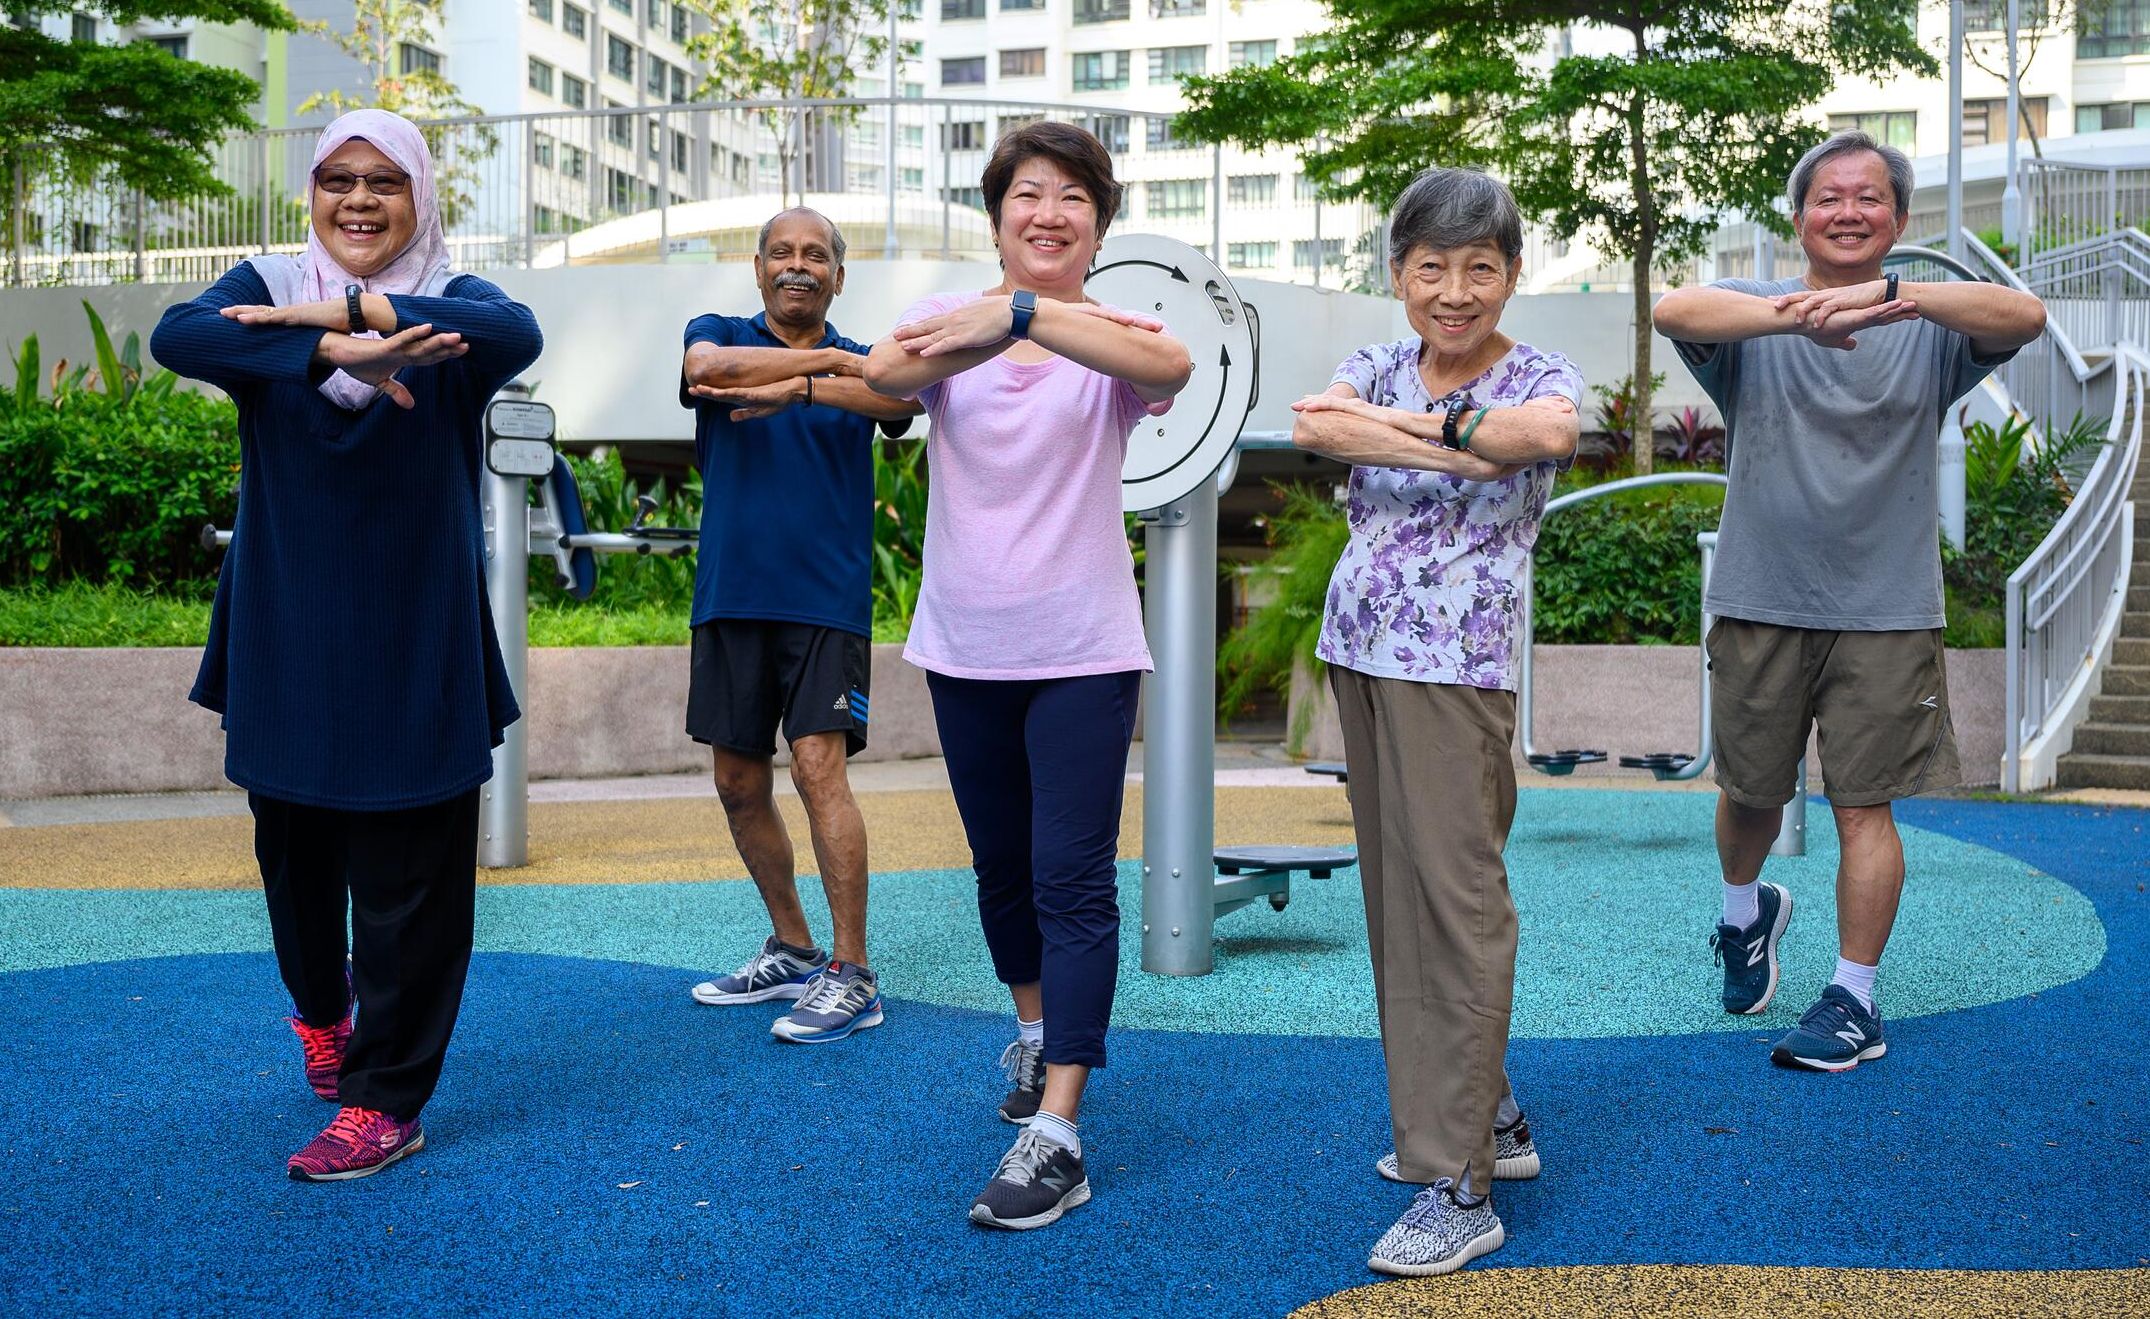 Ilustrasi aktivitas olahraga yang melibatkan pergerakan fisik disarankan bagi para penderita penyakit Parkinson.